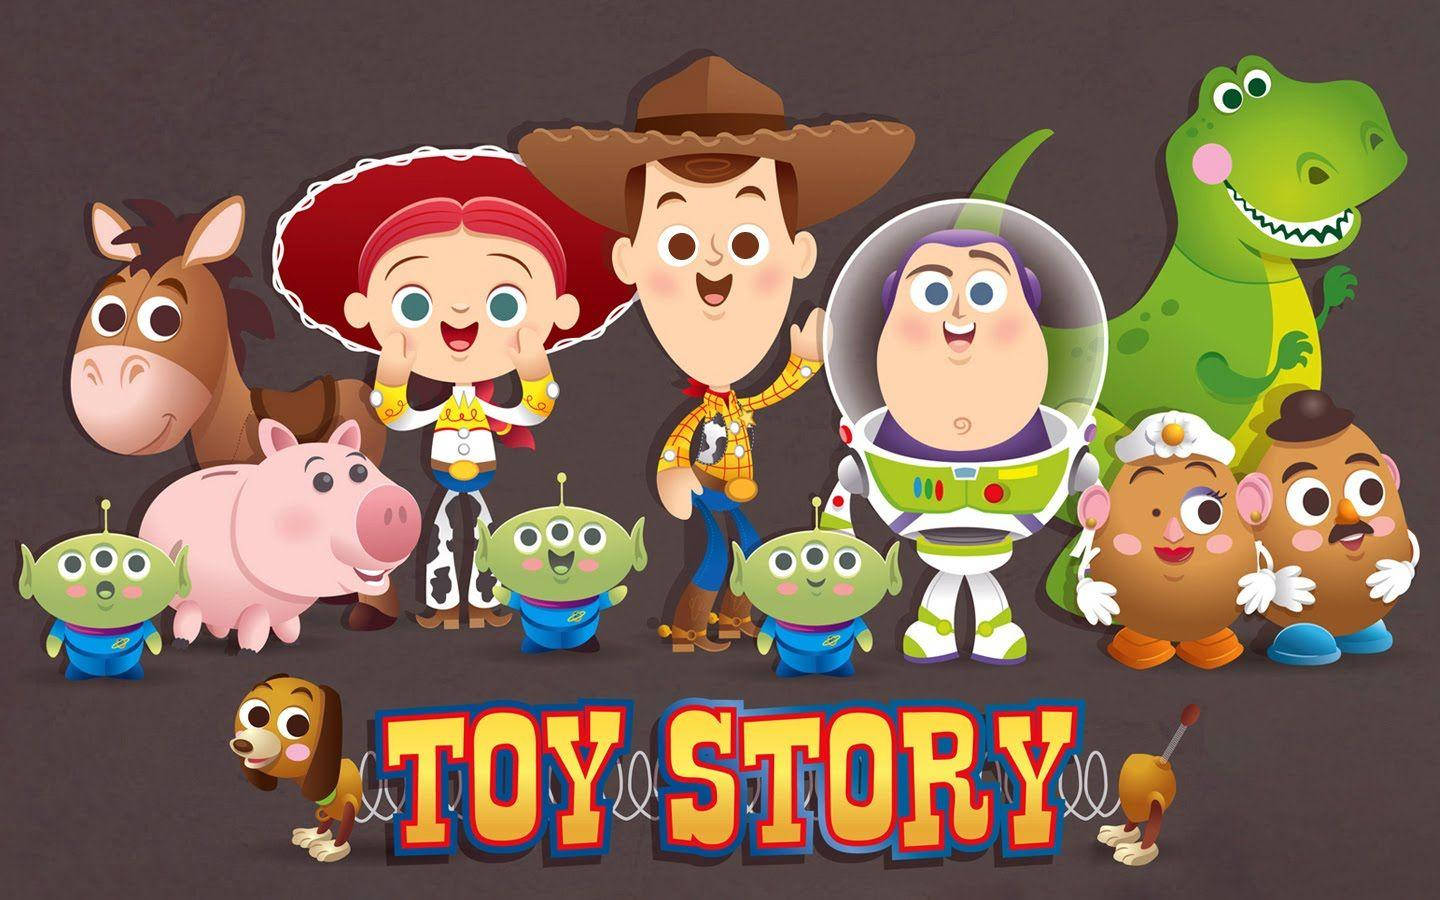 Toy Story 3 Chibi Digital Art Tapet: Tapet af Toy Story 3 Chibi Digital Kunst. Wallpaper